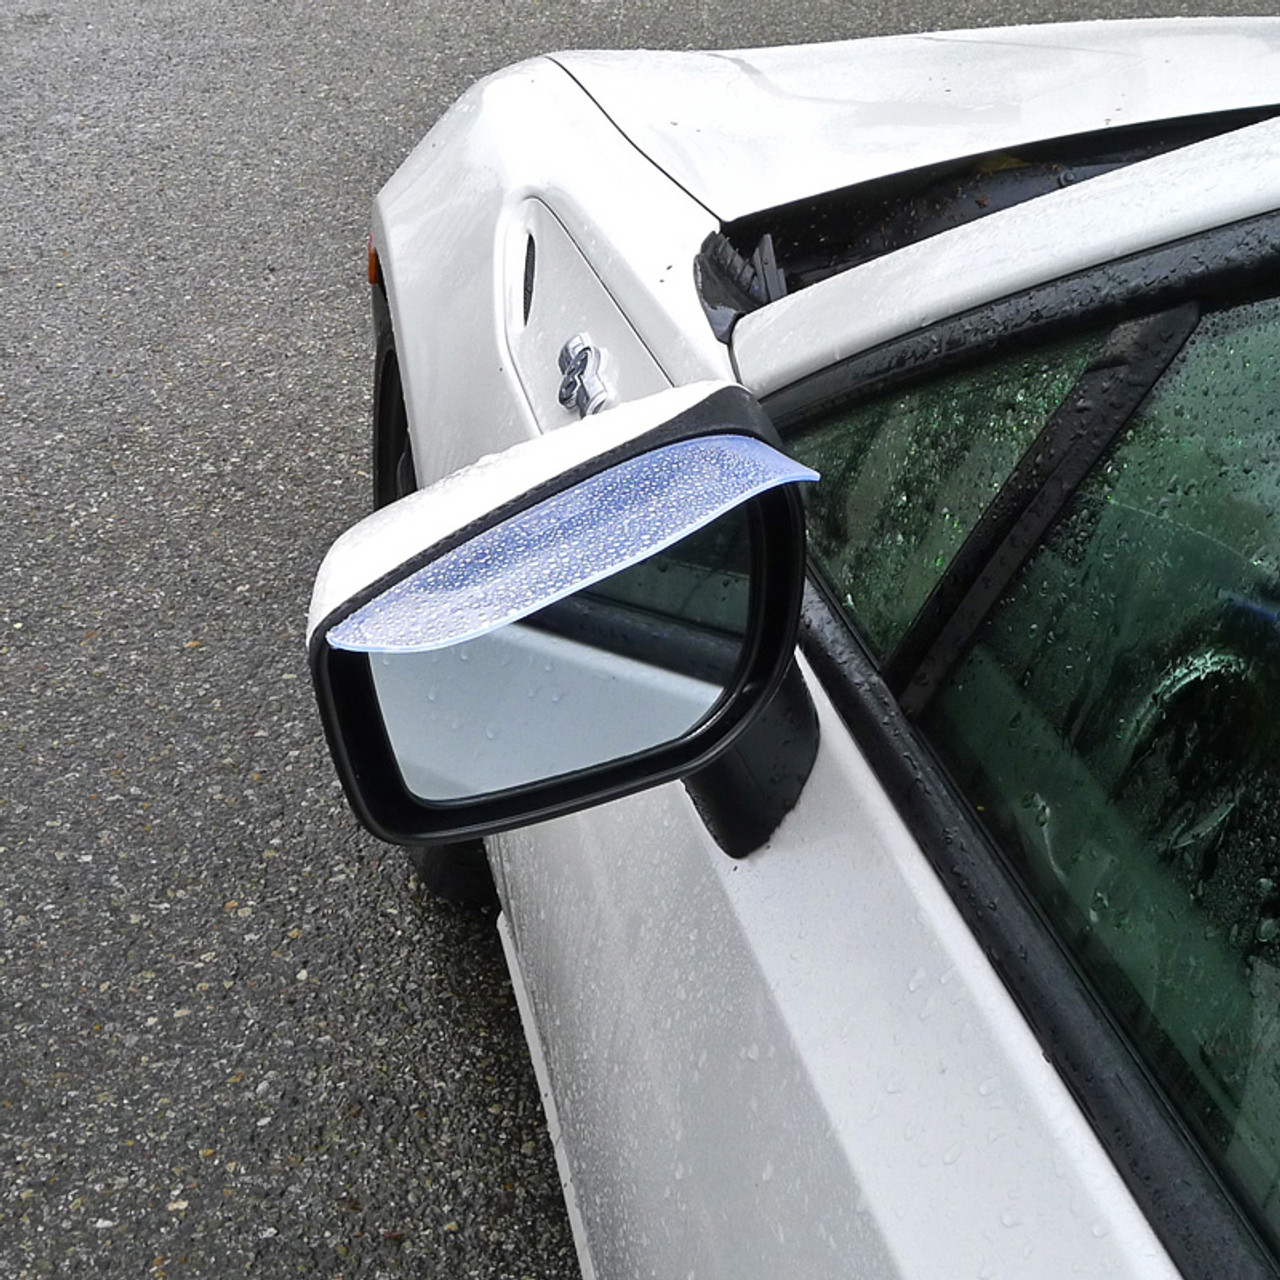 car side mirror waterproof sun visor